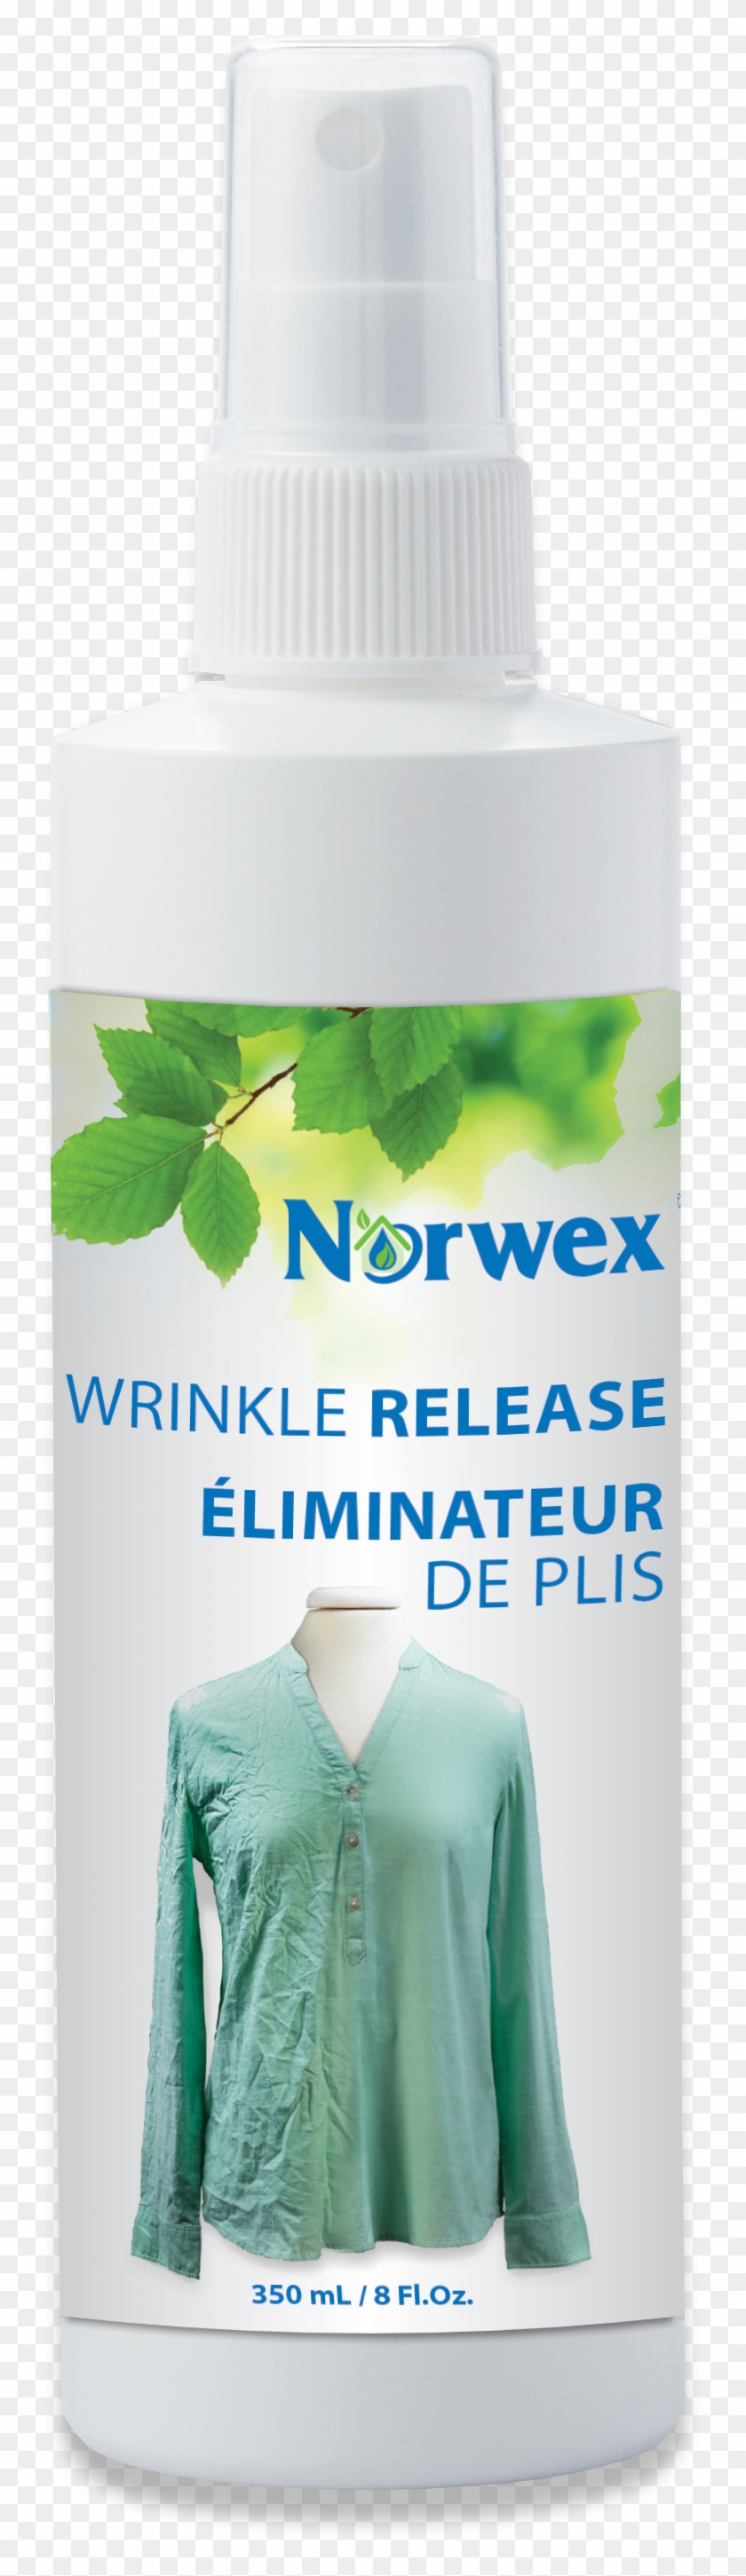 Norwex Wrinkle Relea - Norwex Wrinkle Release Clipart